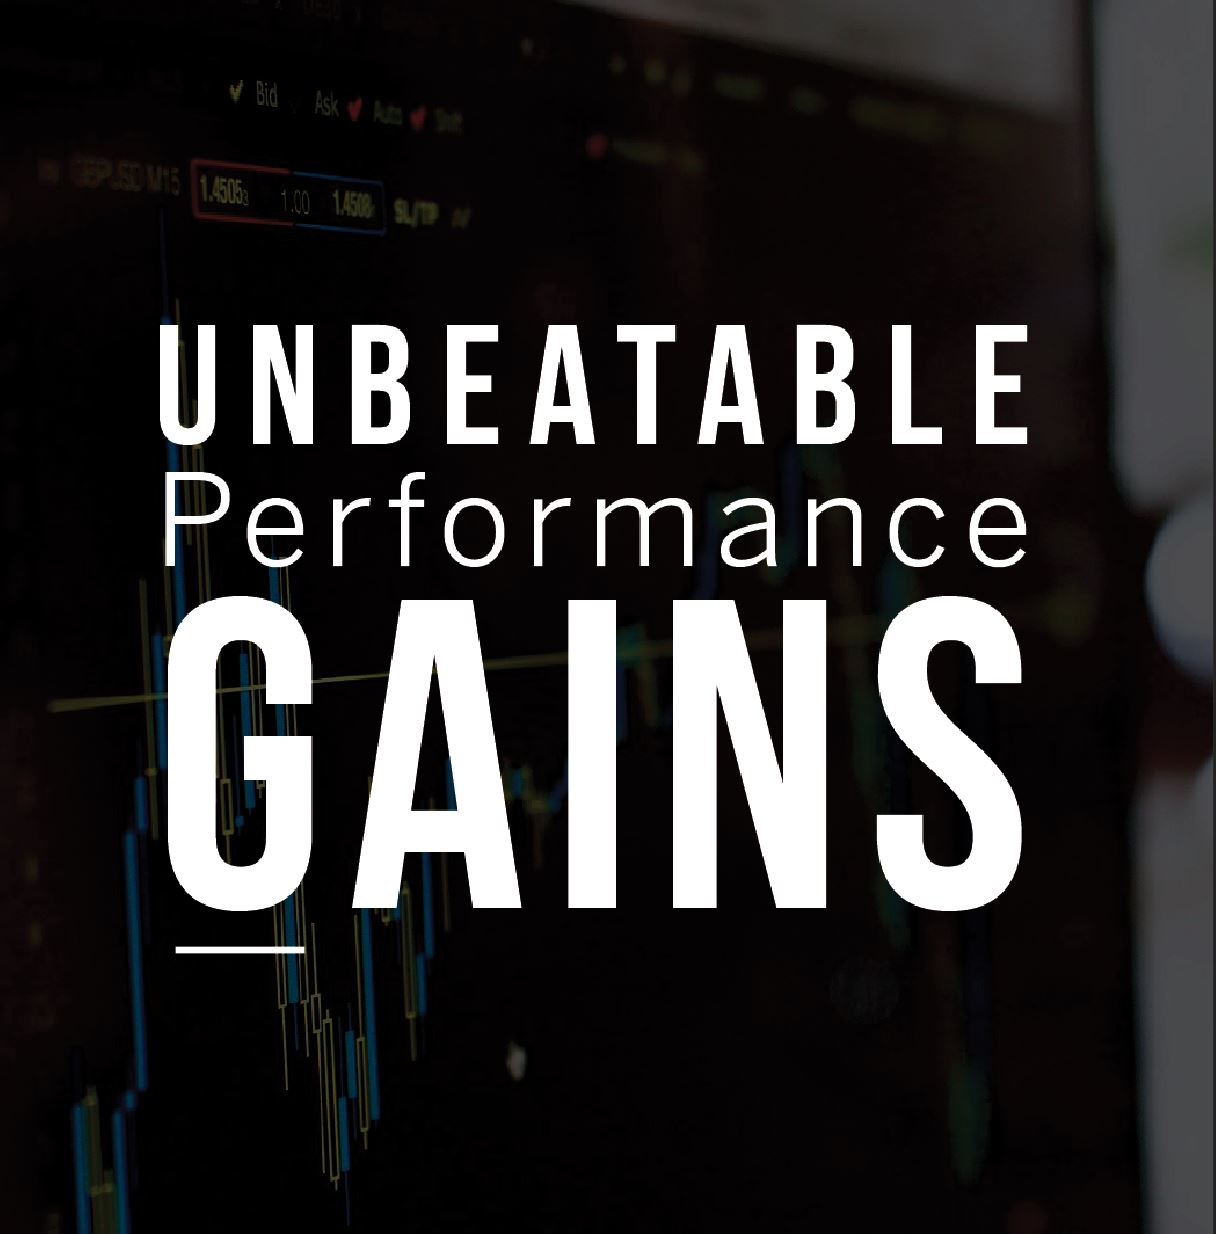 Unbeatable performance gains